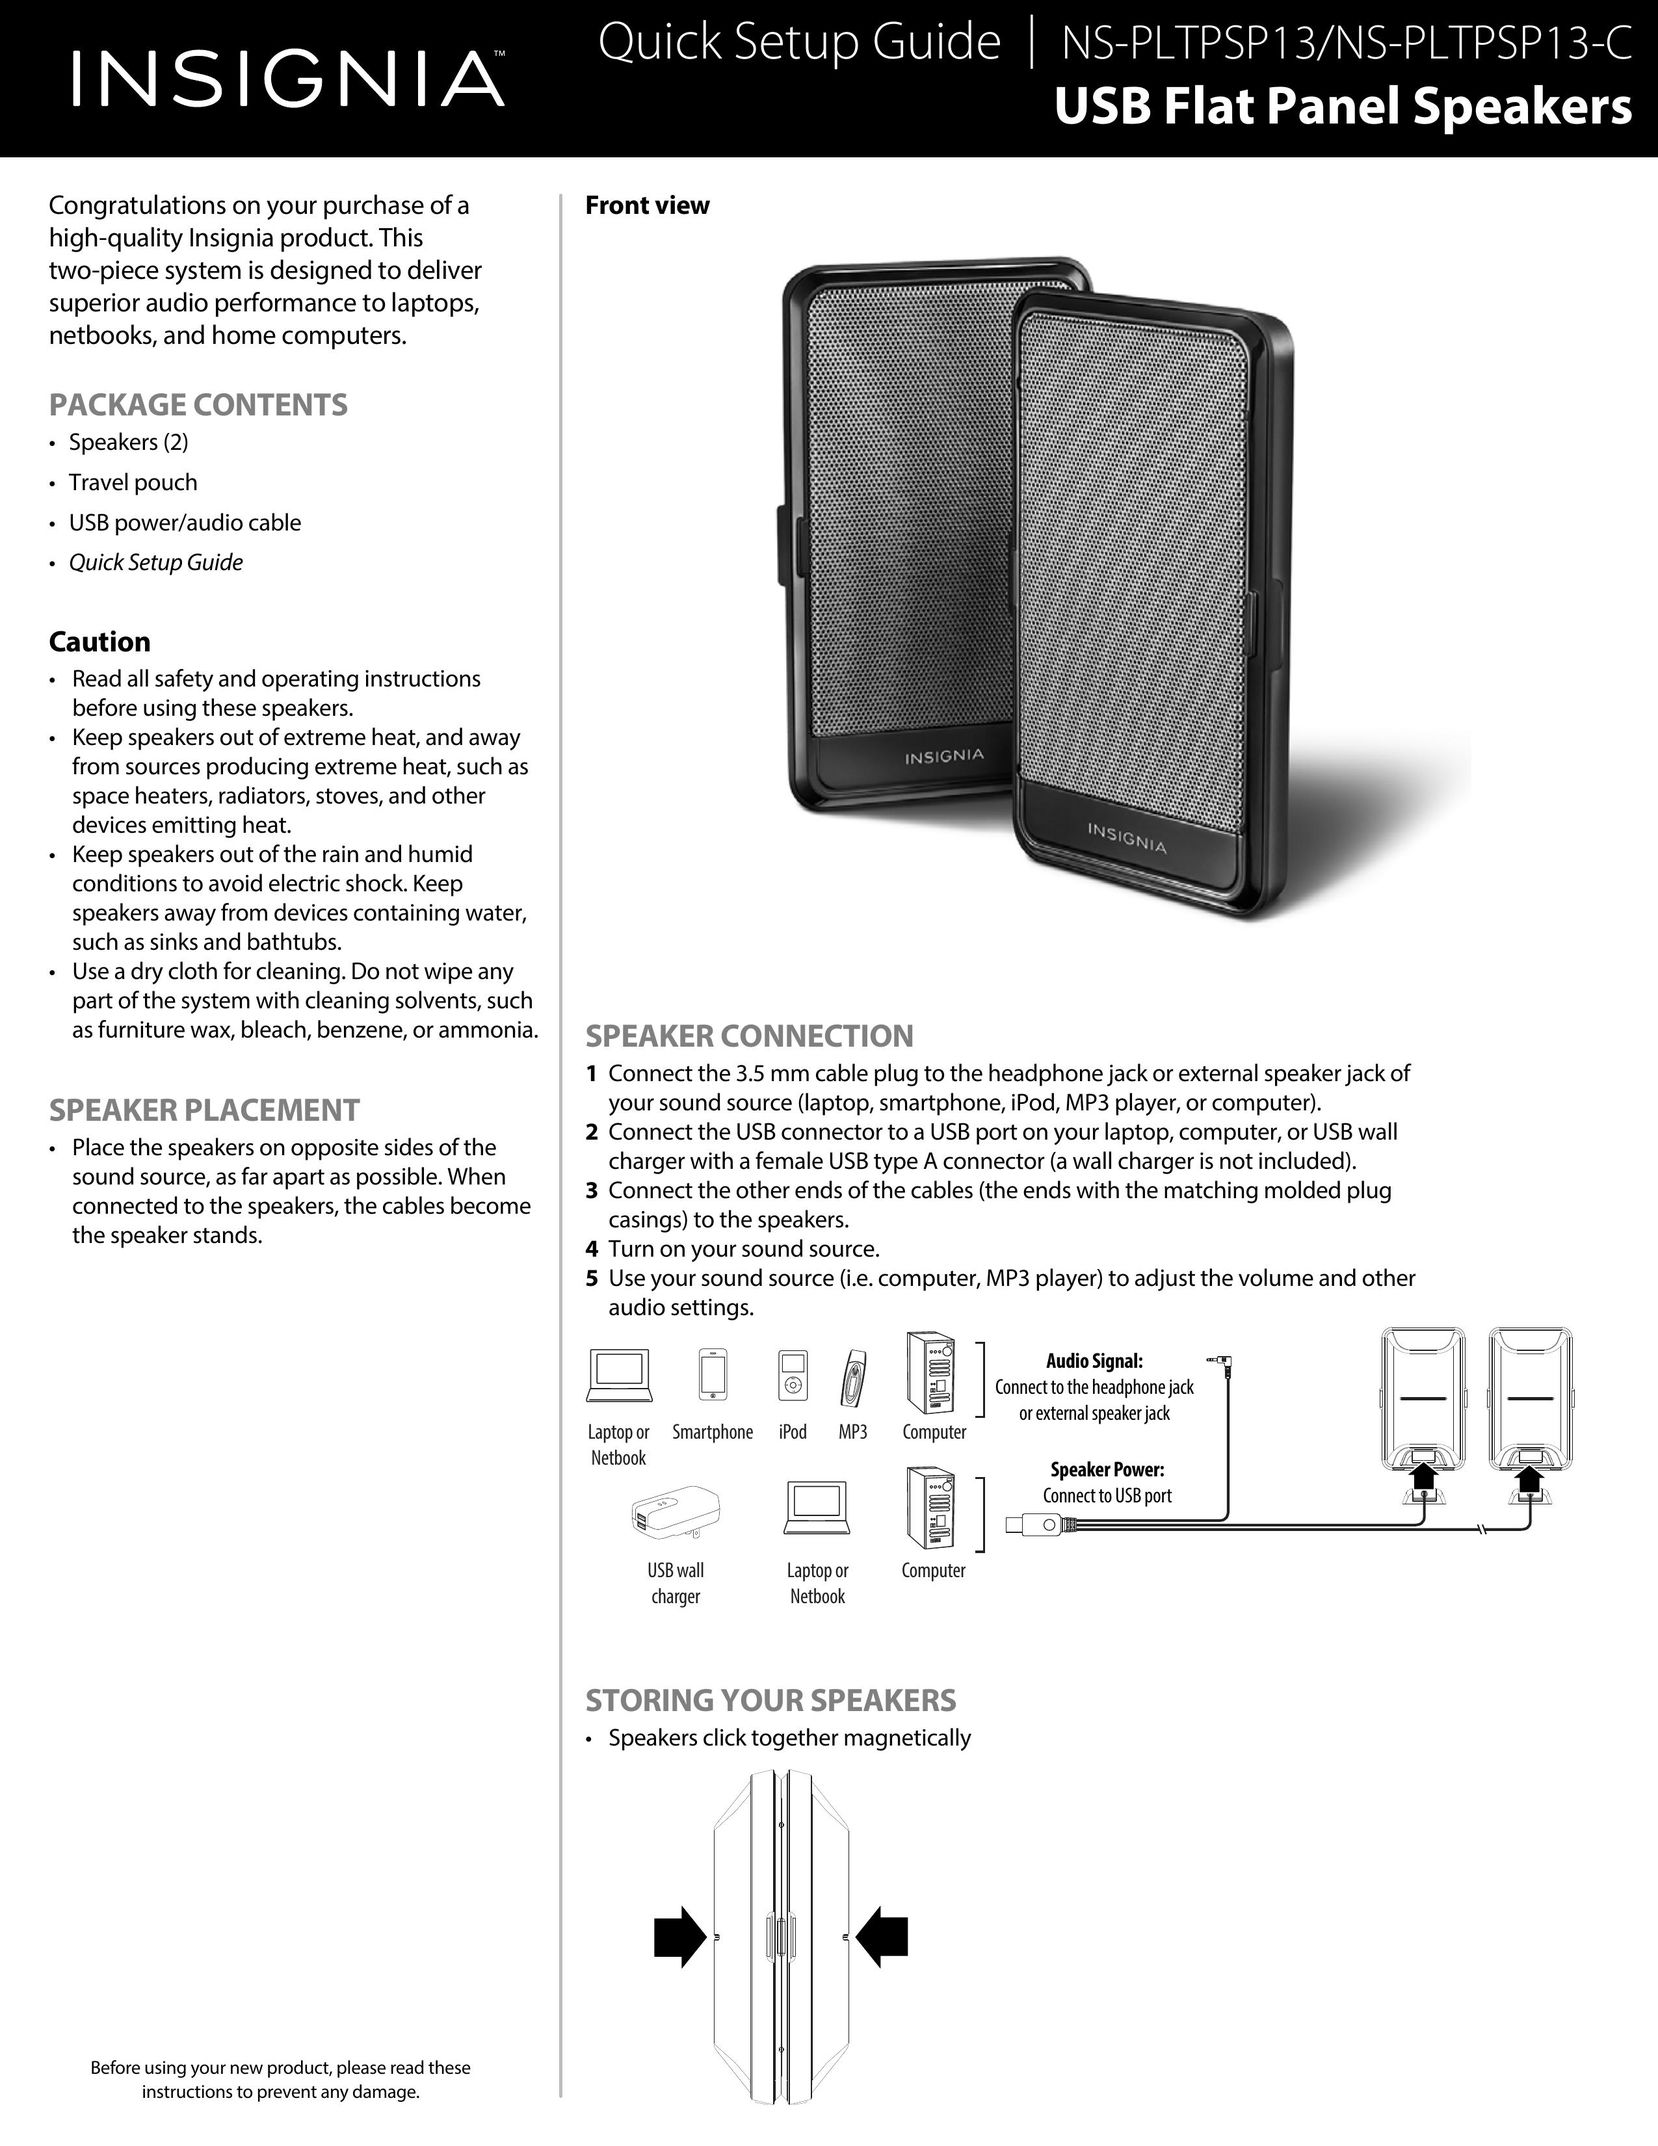 Insignia NS-PLTPSP13-C Car Speaker User Manual